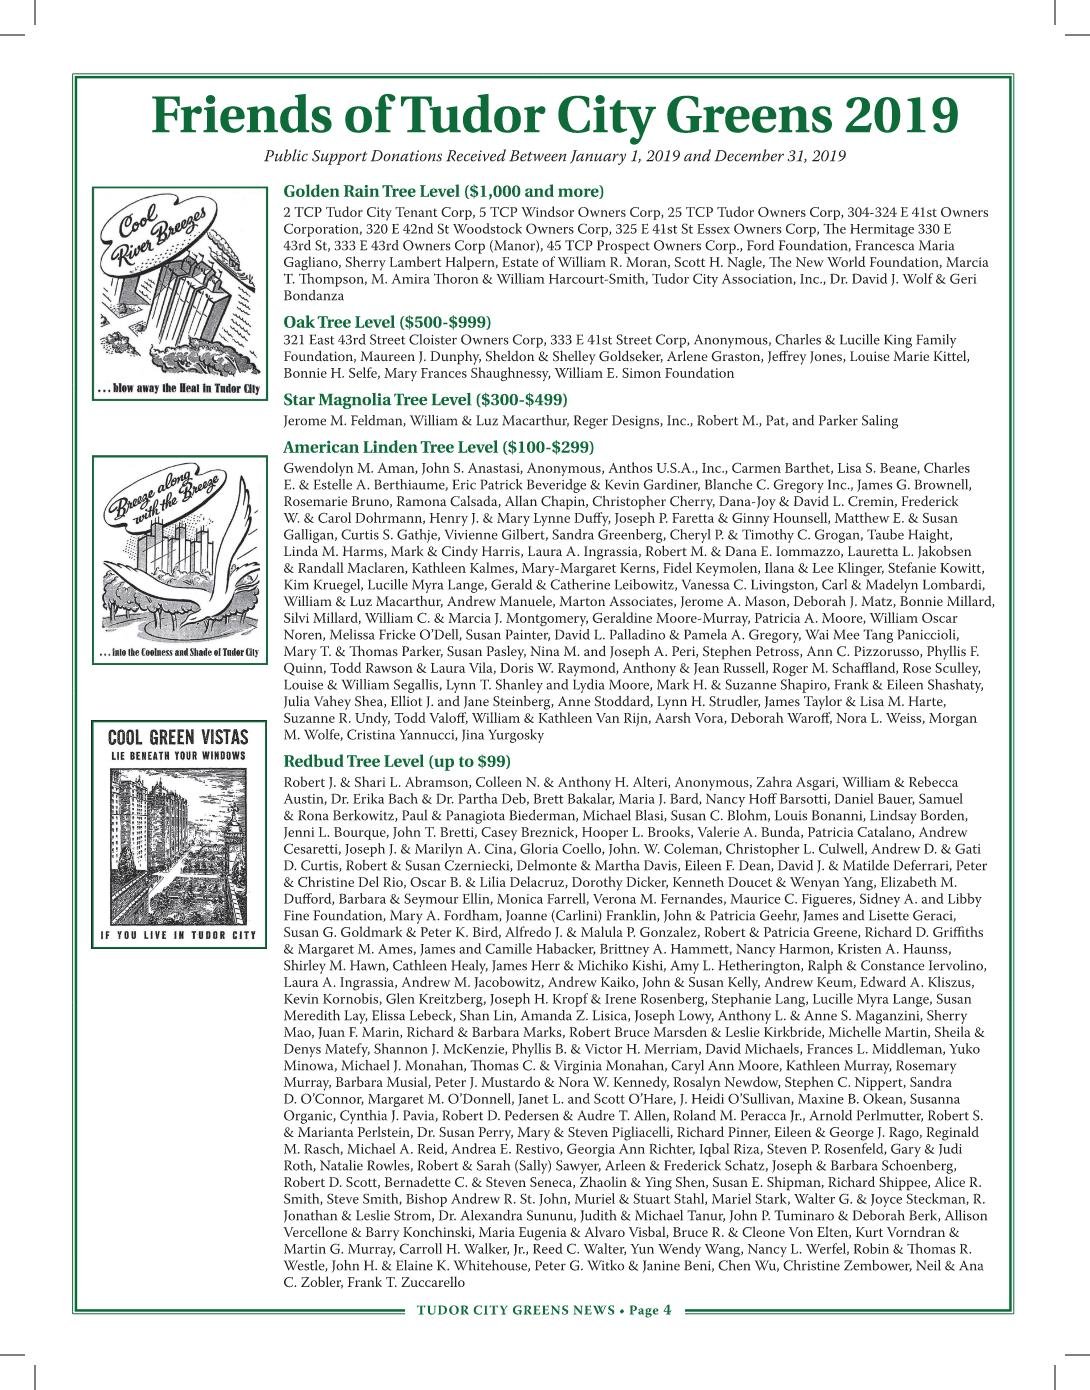 Tudor City Newsletter_Dec 2020 Page 005.jpg